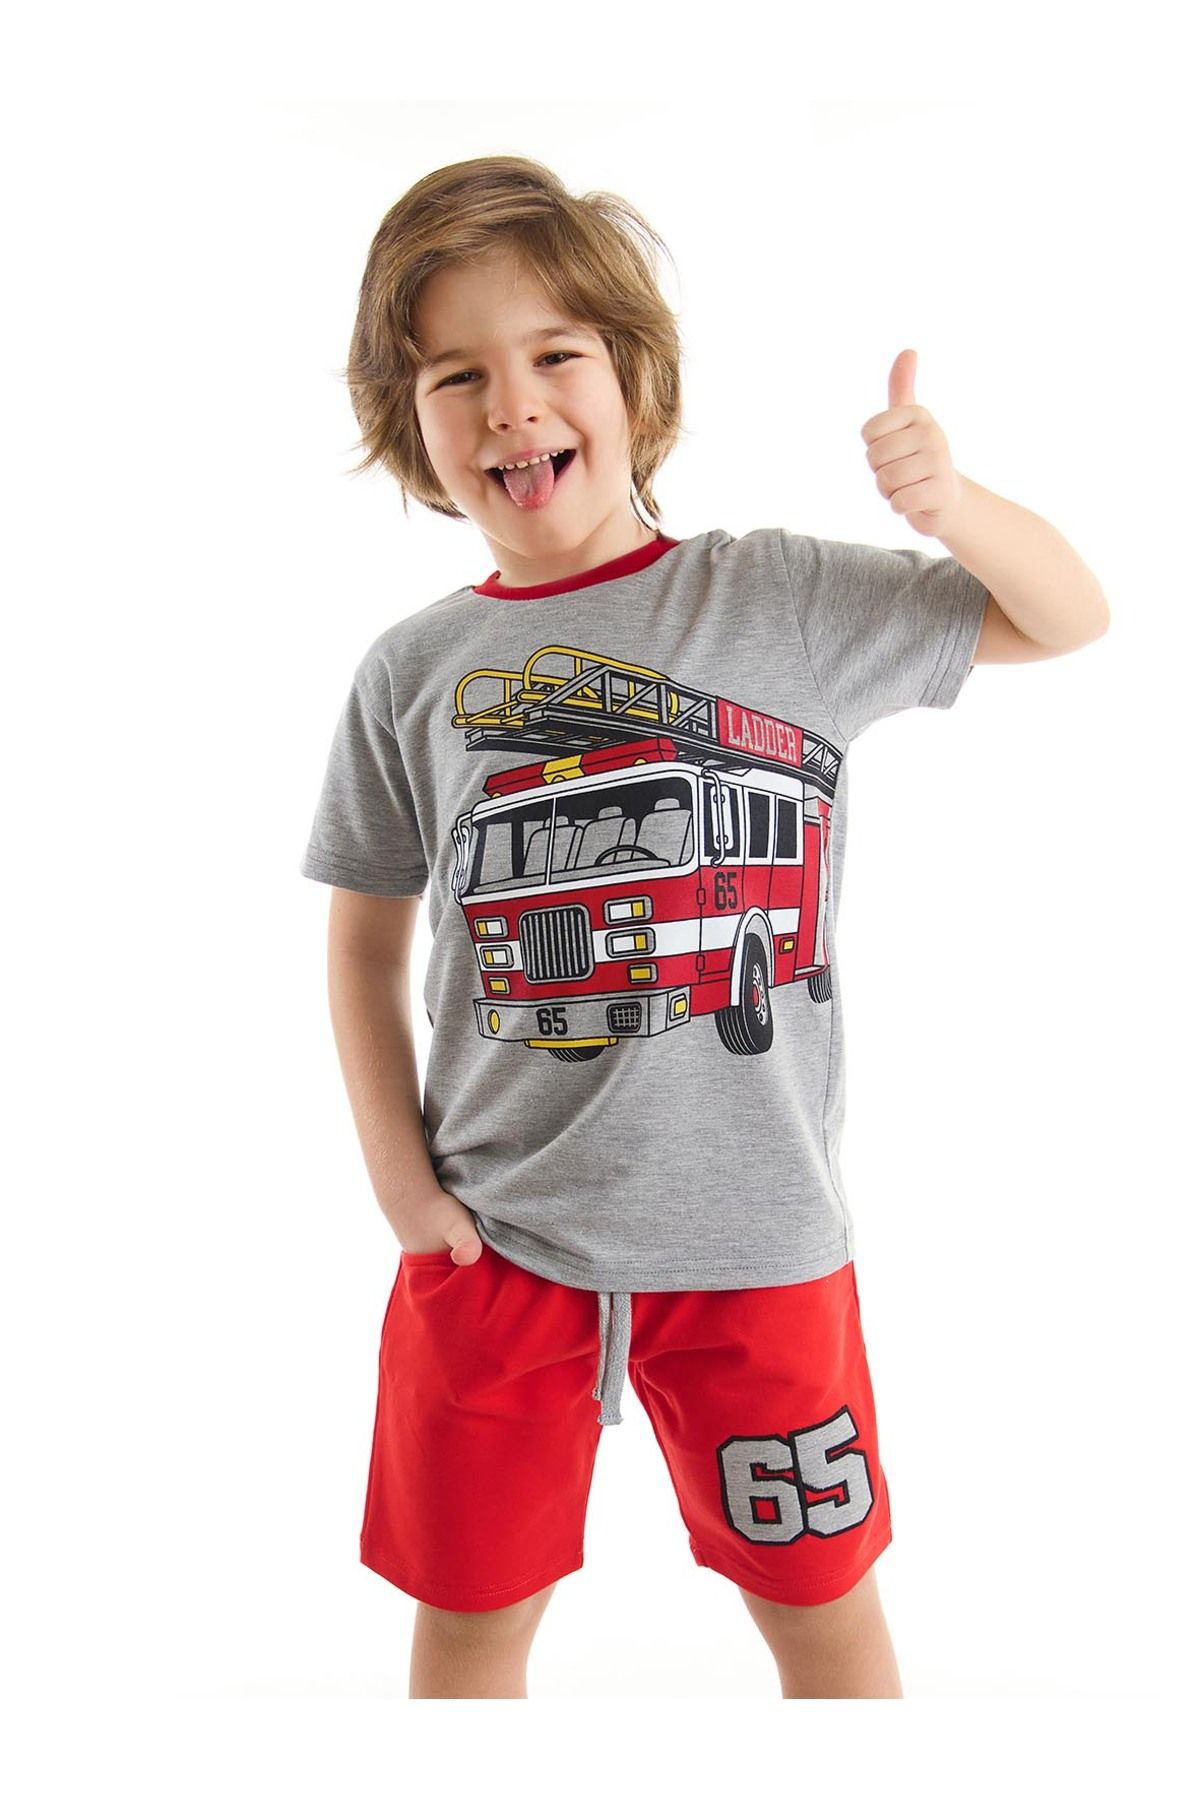 MSHB&G İtfaiye Erkek Çocuk T-shirt Şort Takım